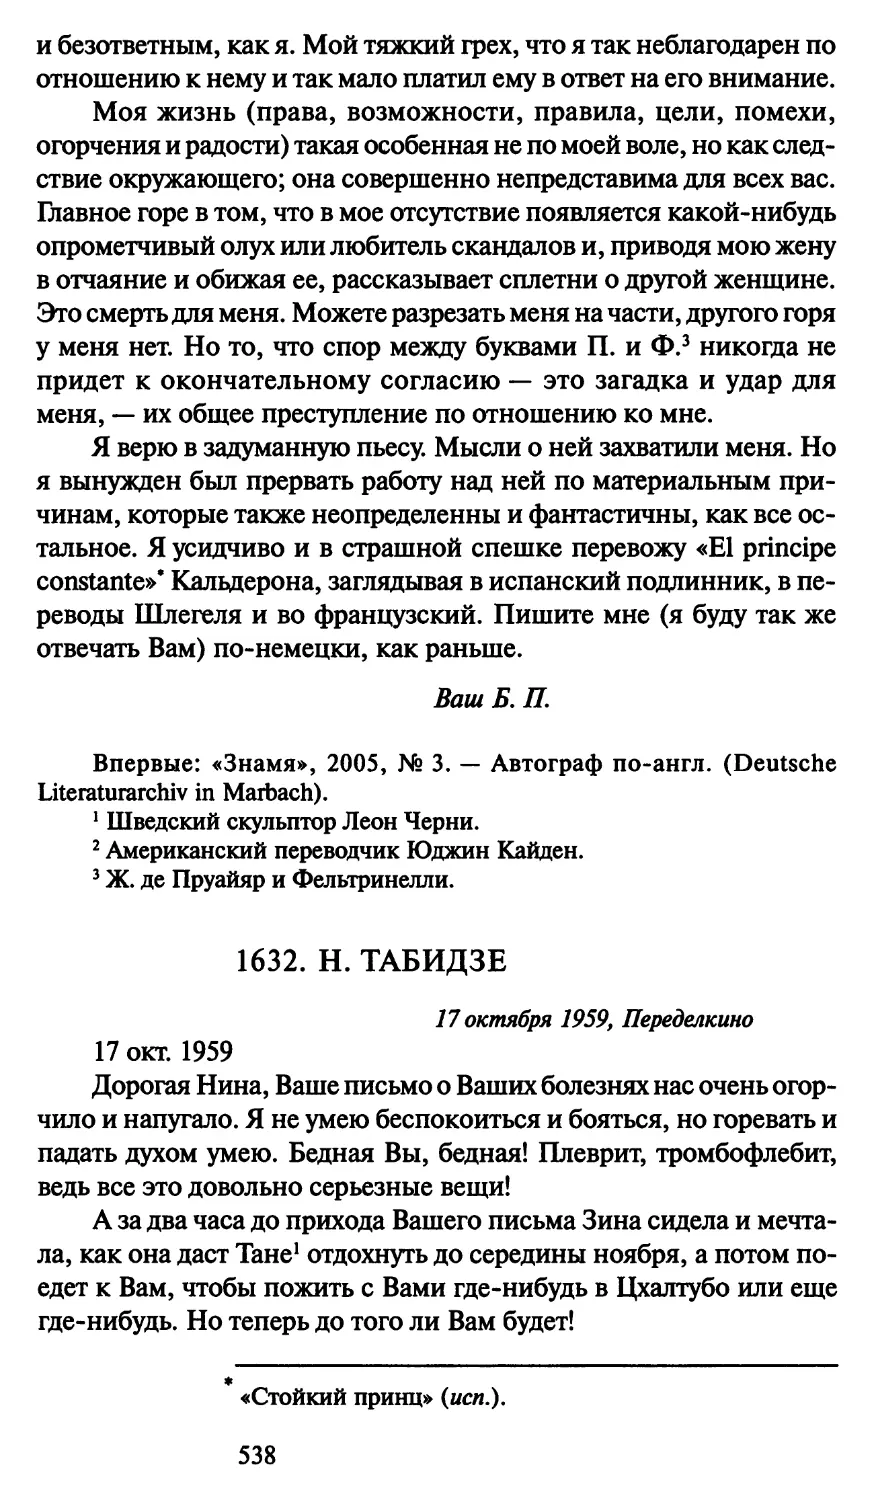 1632. Н. Табидзе 17 октября 1959